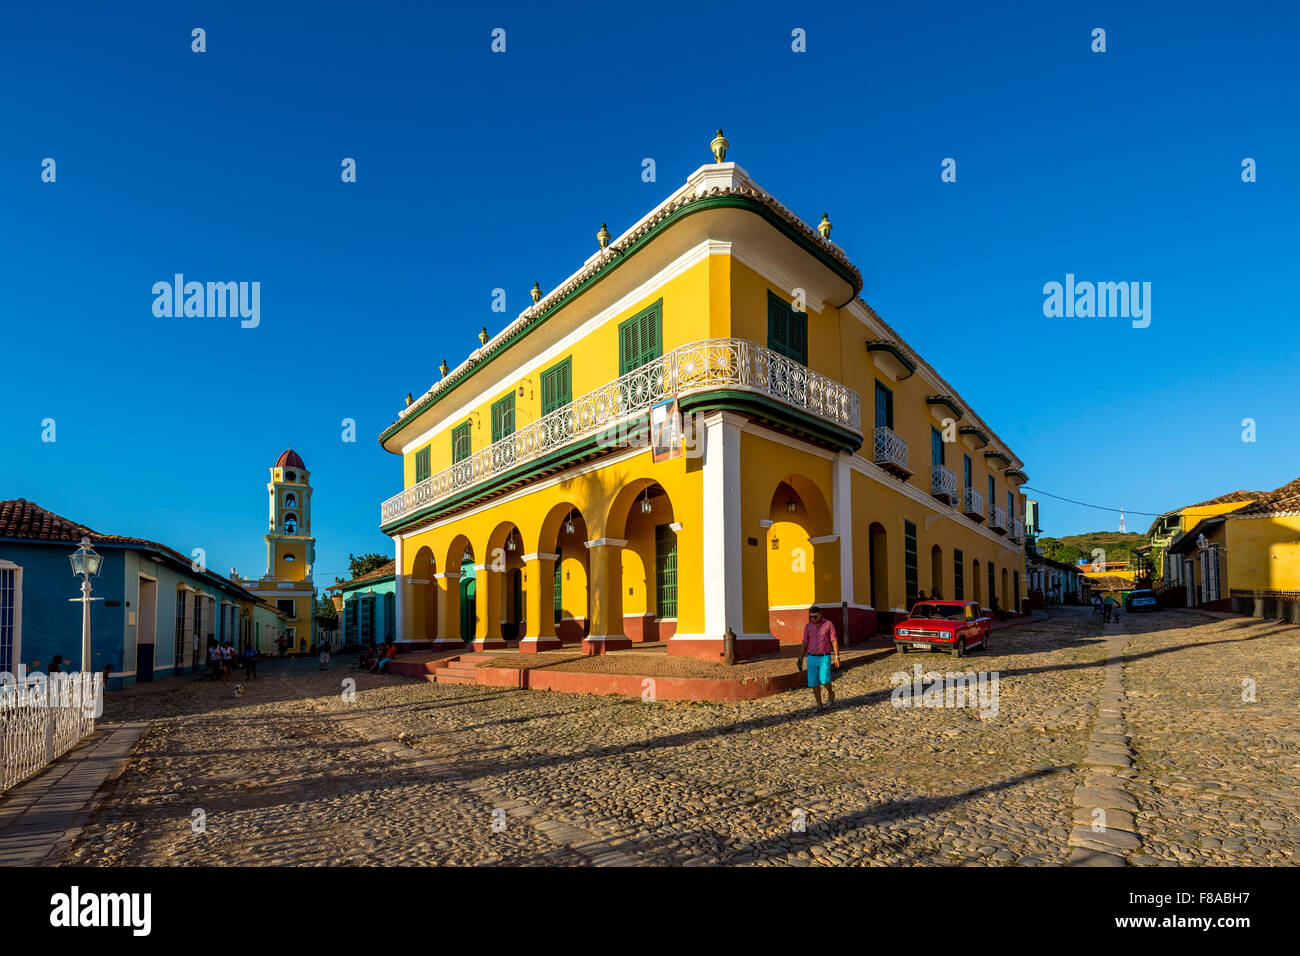 Center of Trinidad Palacio Brunet, yellow palace with blue sky and the church Convento de San Francisco de Asis, Street Scene, Stock Photo